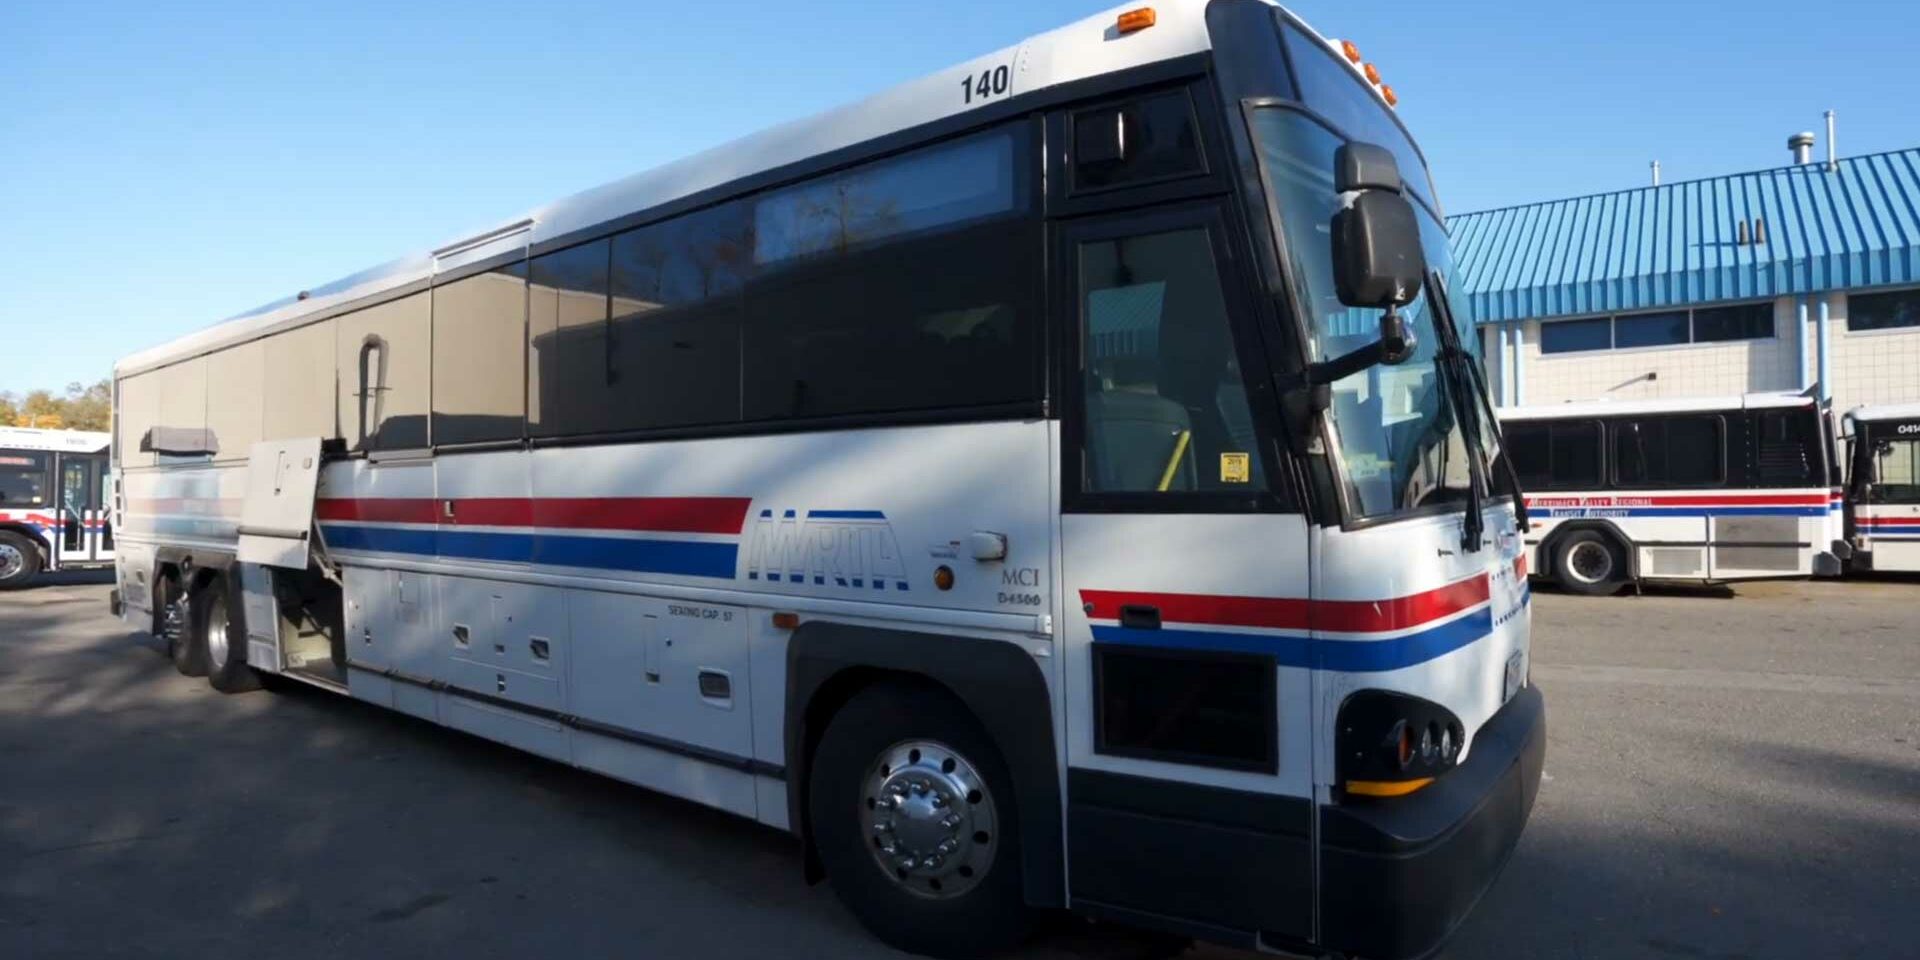 Merrimack Valley Regional Transit Authority (MVRTA) Bus